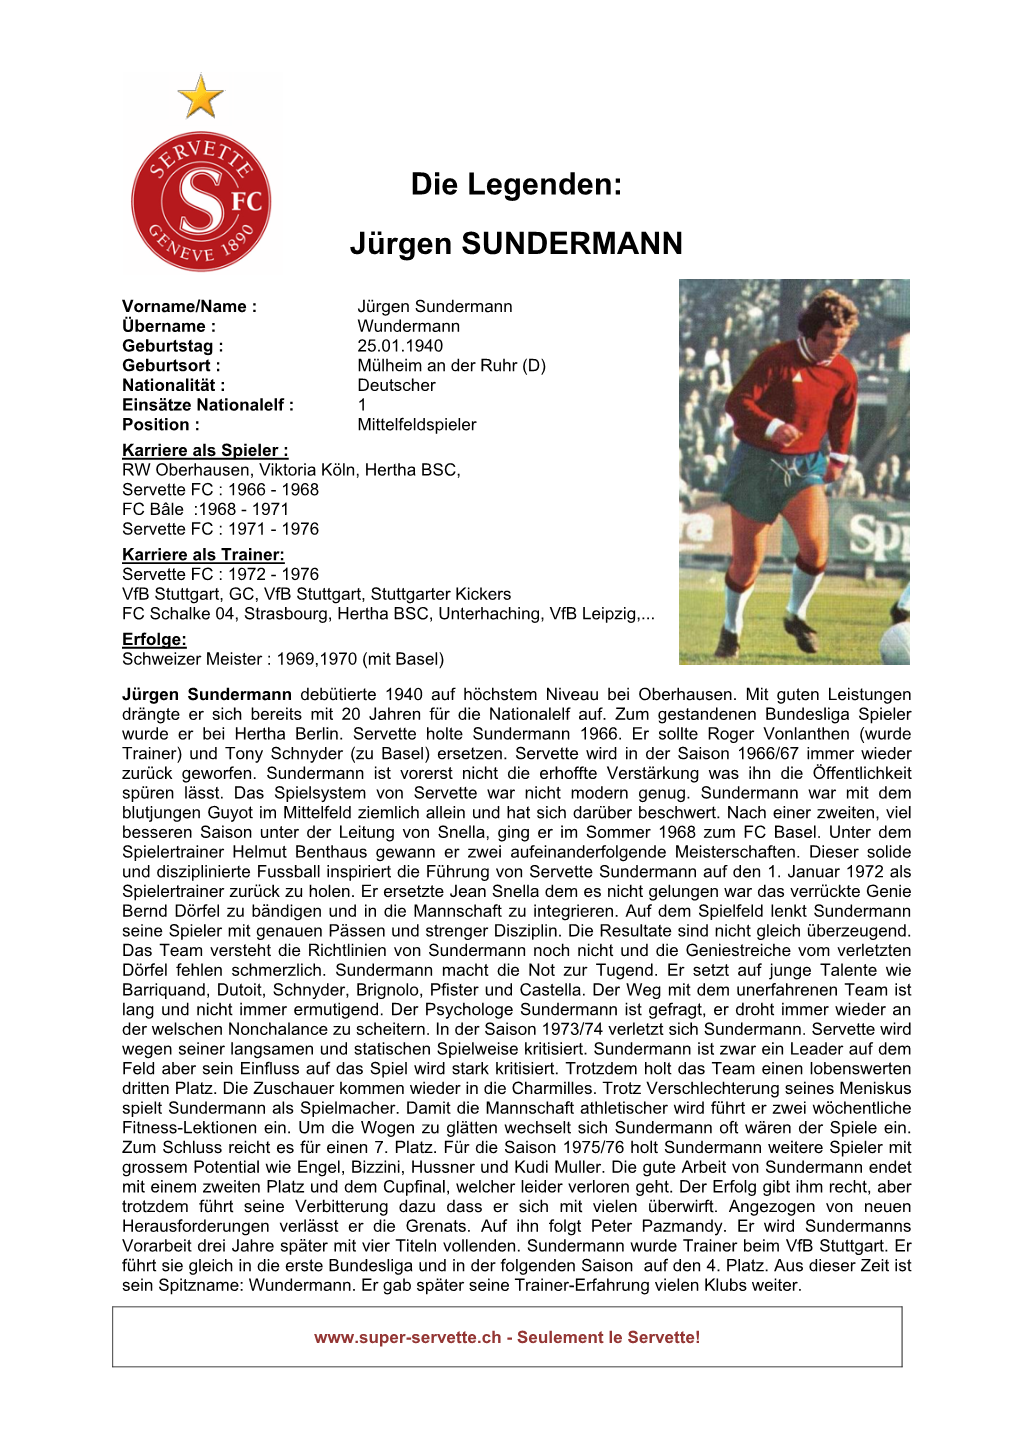 Jürgen SUNDERMANN